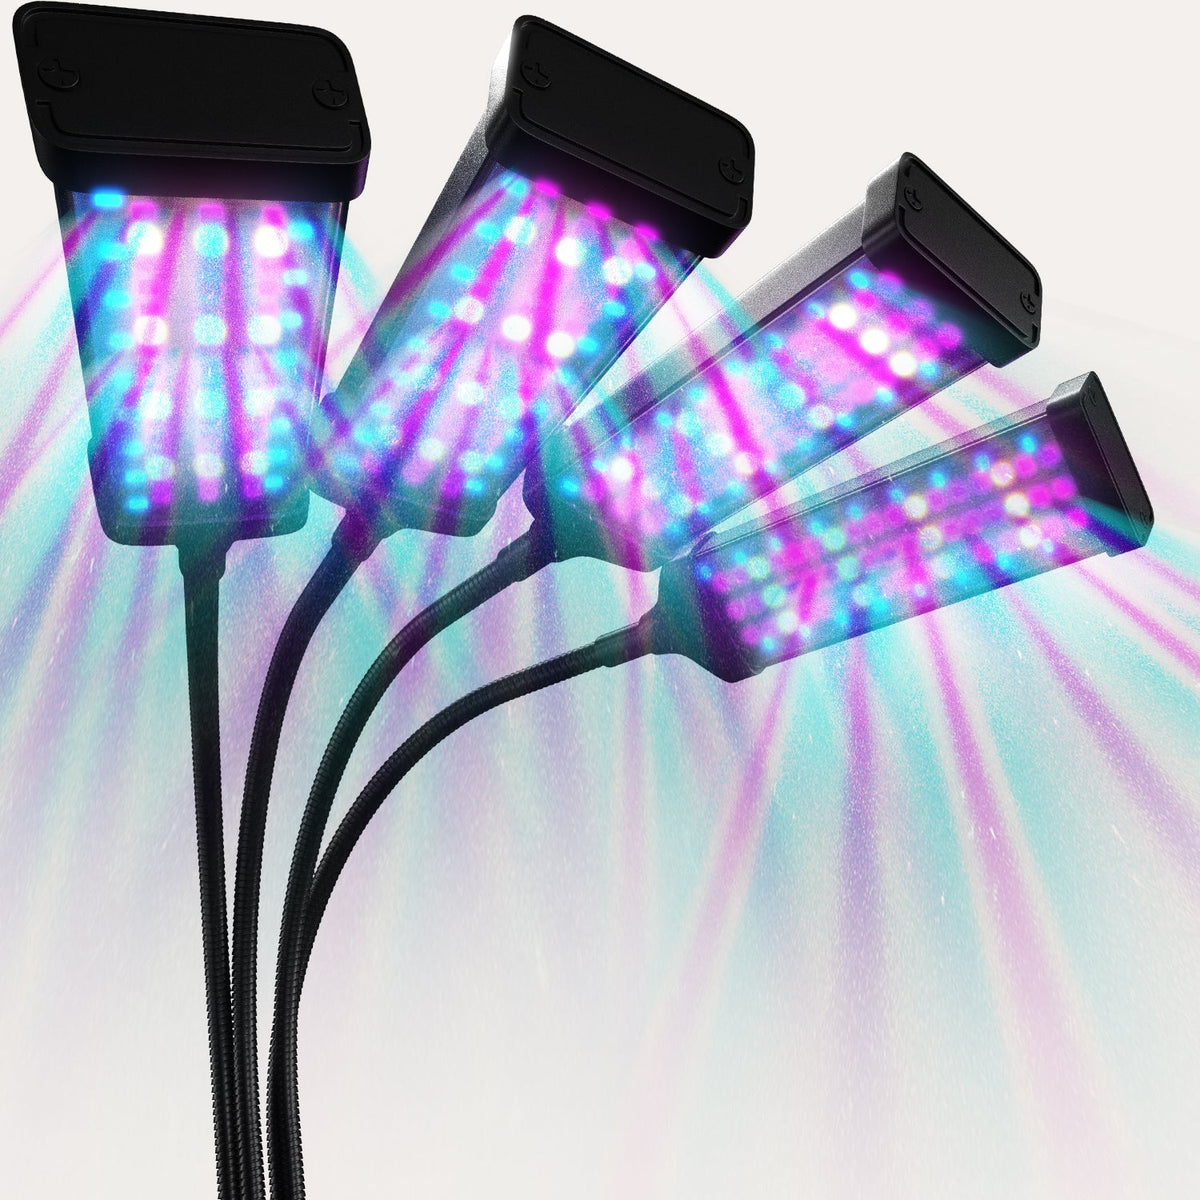  Everlasting Comfort Grow Lights for Indoor Plants Full  Spectrum - LED Grow Light (4 Lamps), 3-18 Hour Timer, Adjustable 63  Tripod, Indoor Grow Lights for House Plants, Plant Light for